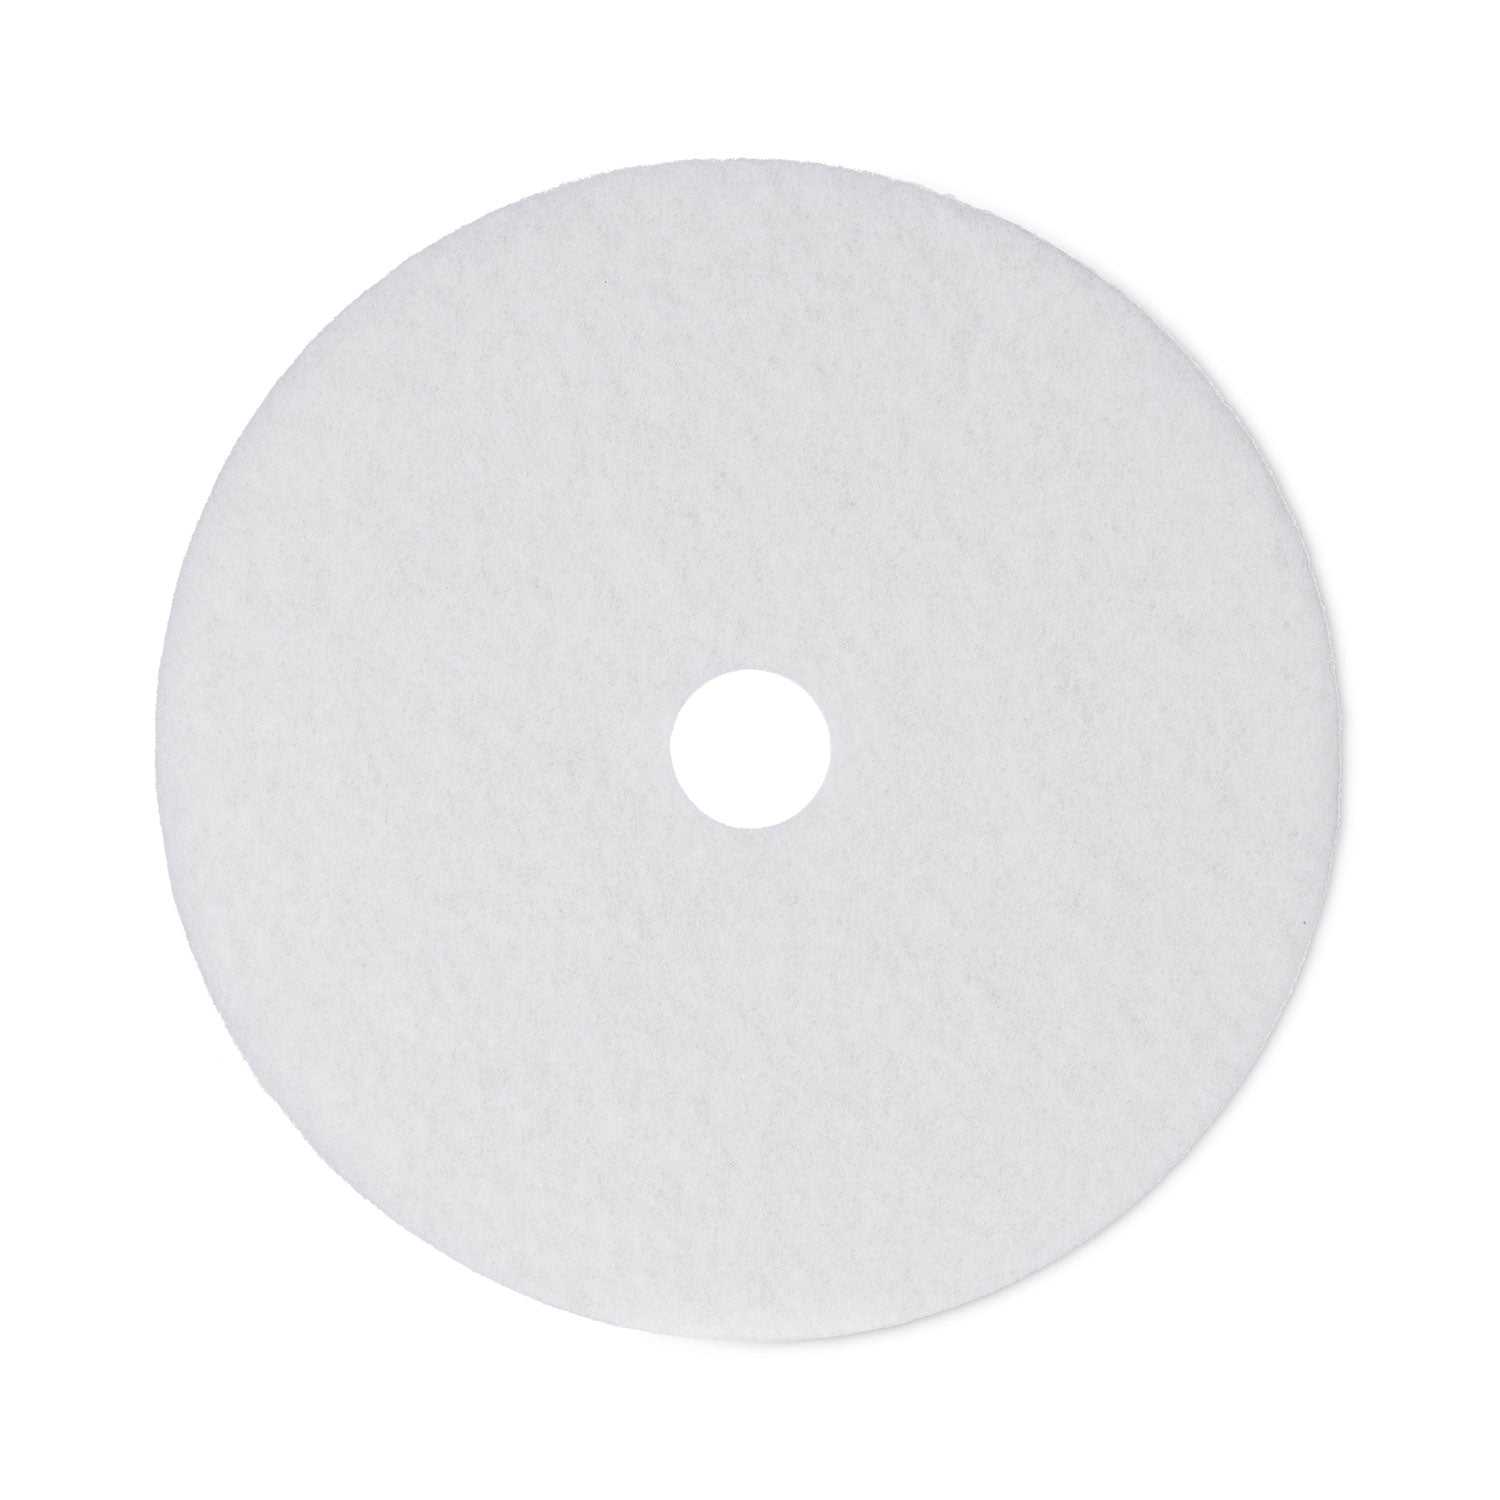 polishing-floor-pads-24-diameter-white-5-carton_bwk4024whi - 1